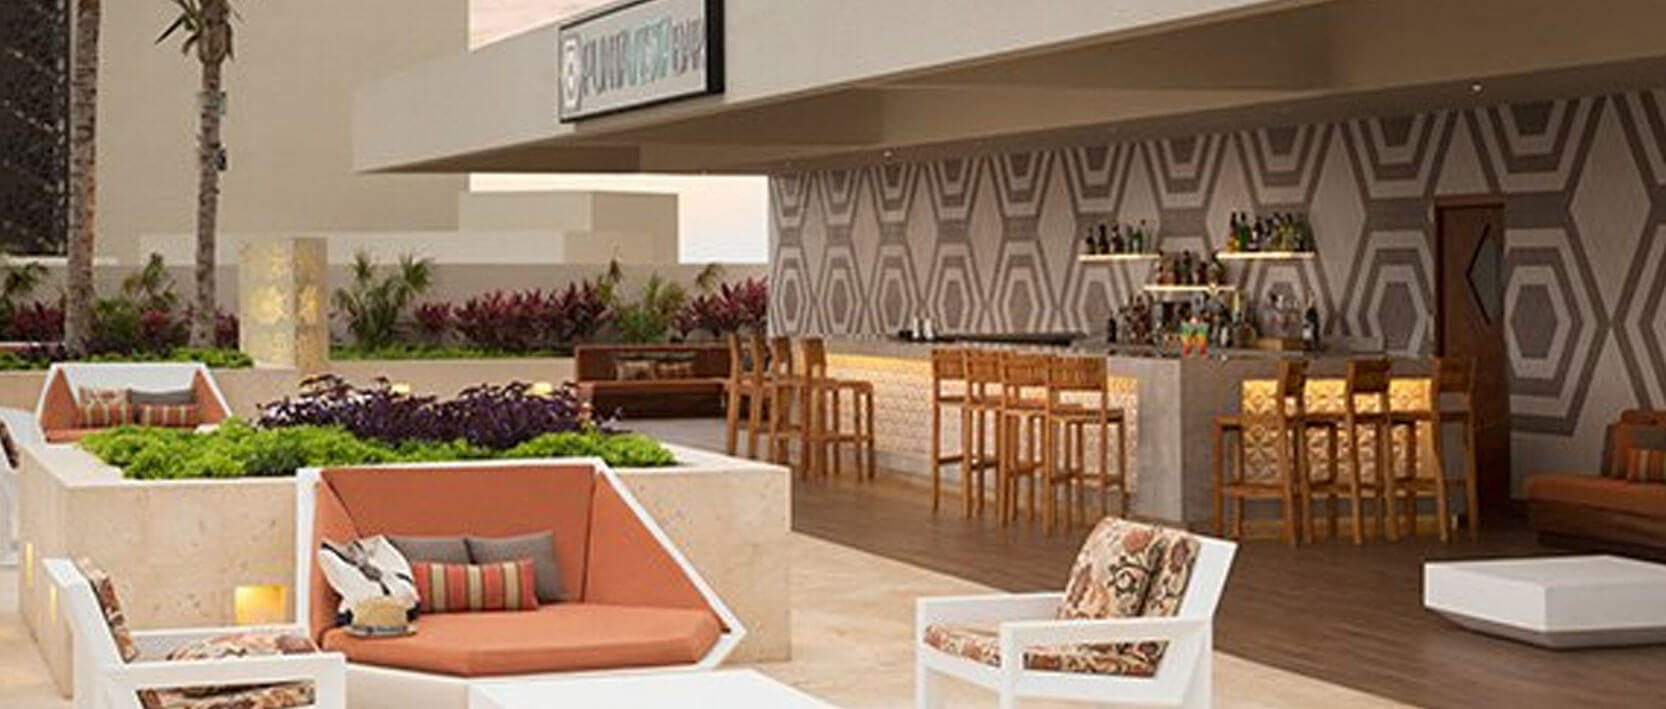 Hyatt Ziva Cancun Restaurants and Bars - Punta Vista